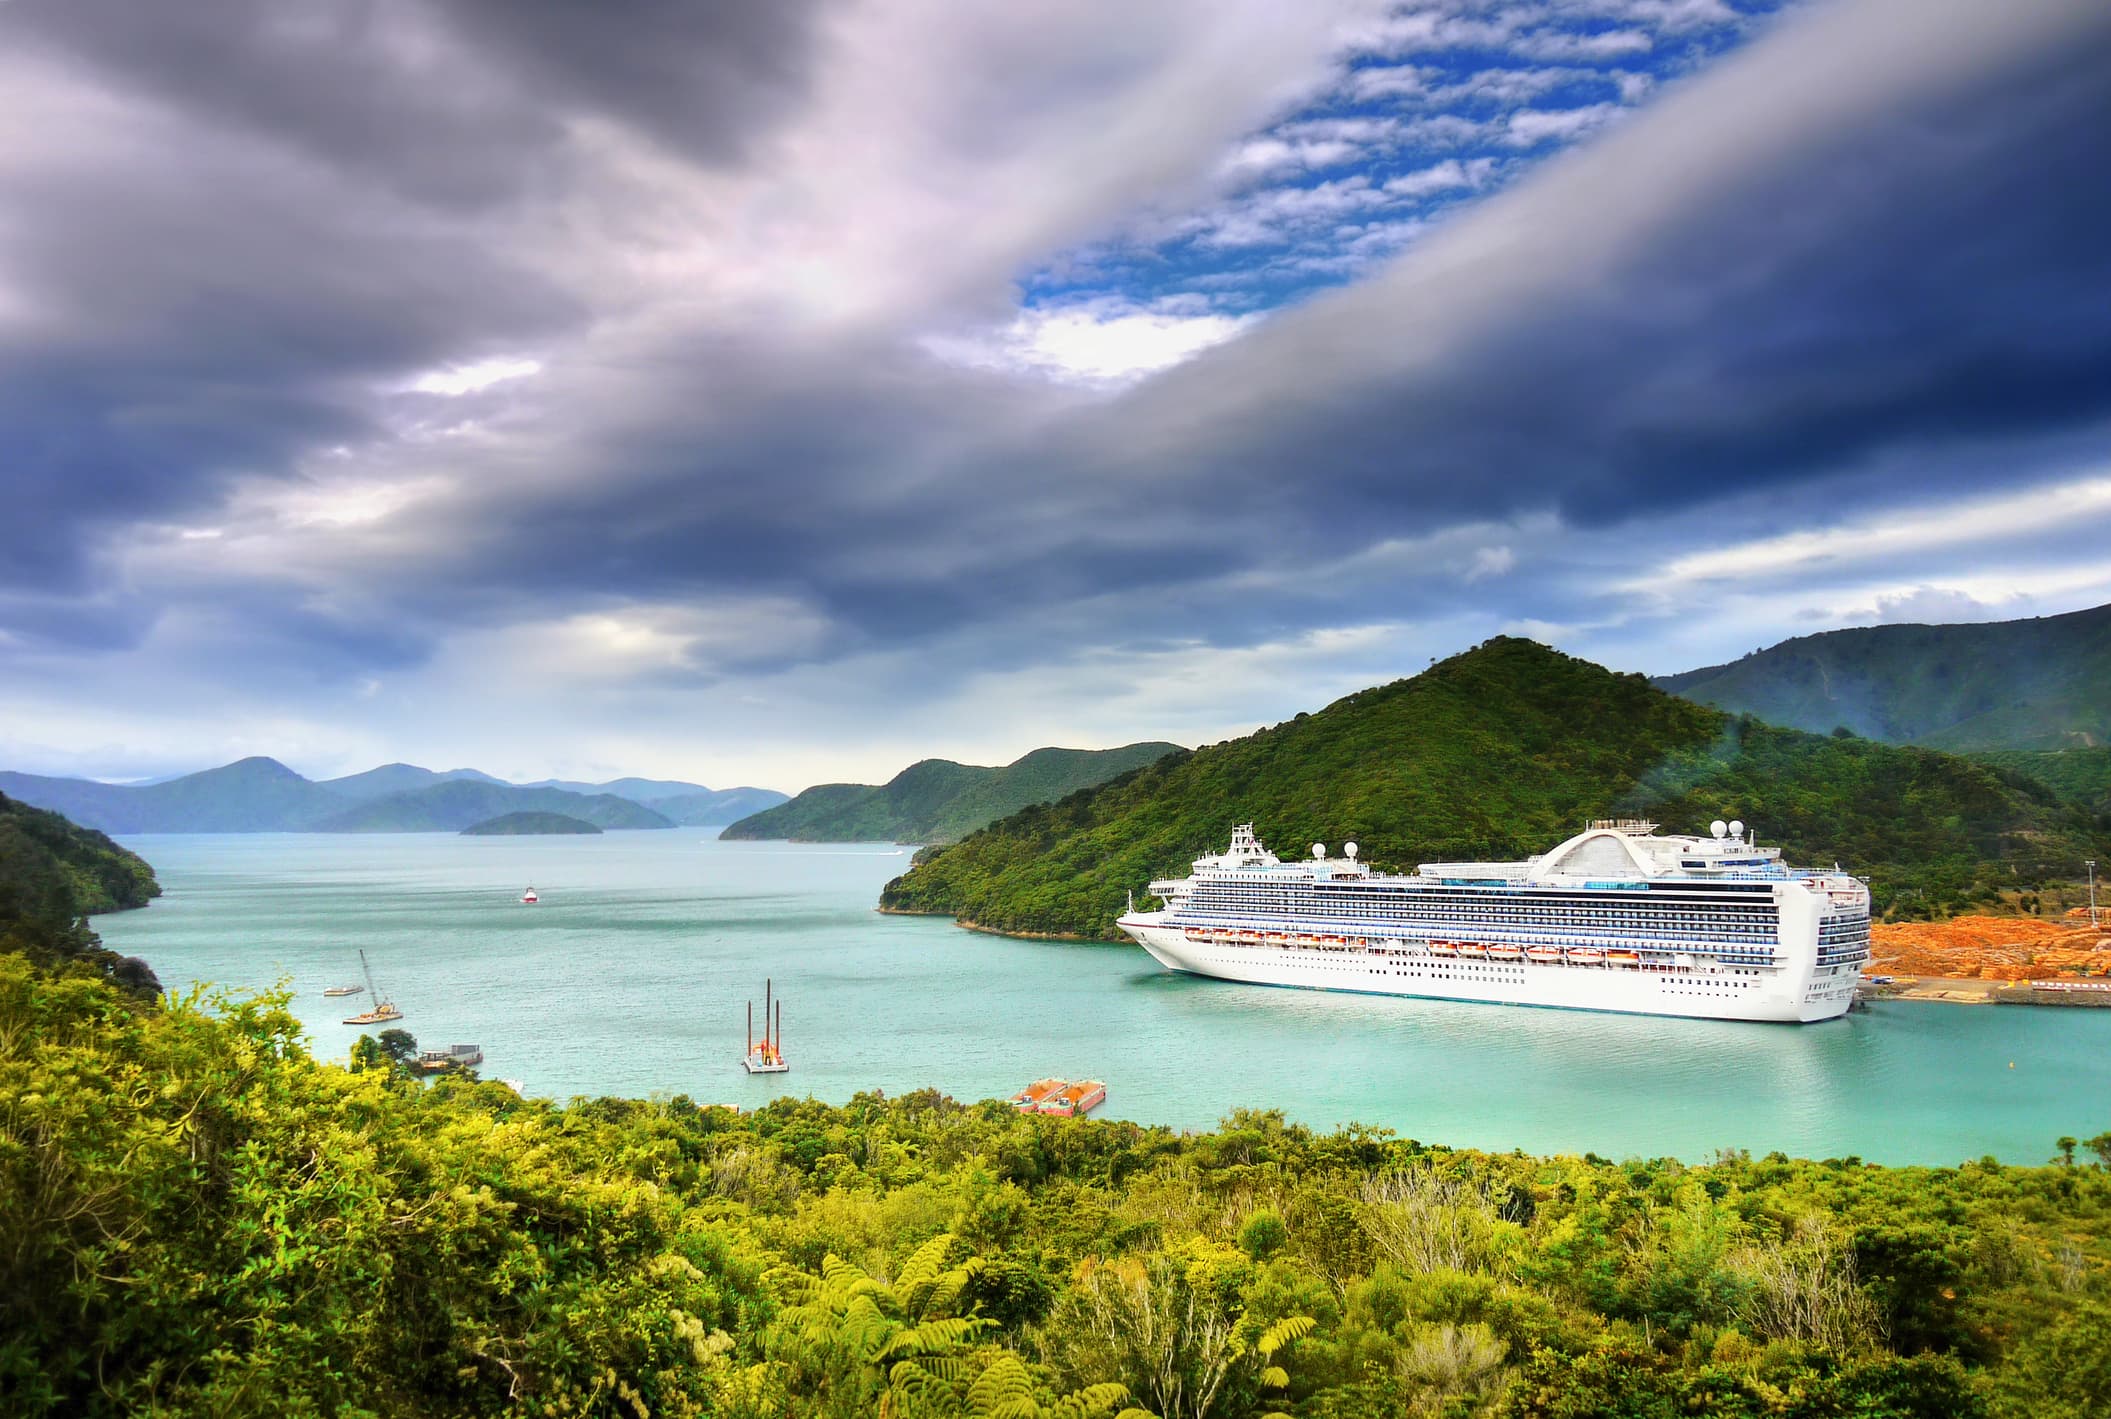 A cruise ship navigates a waterway in beautiful New Zealand mountains